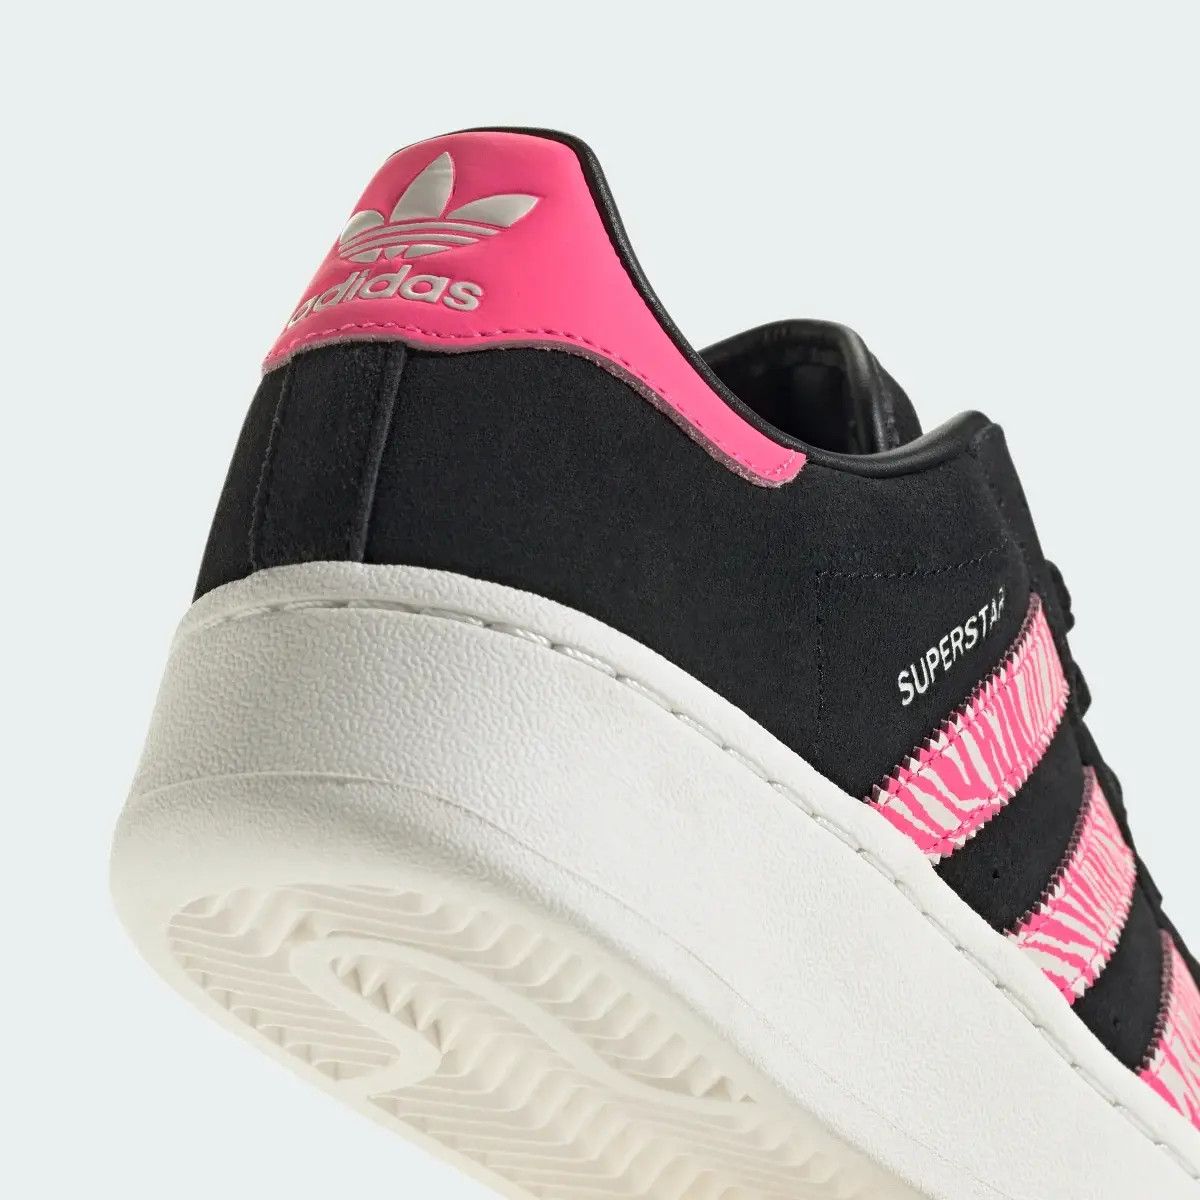 Adidas Superstar XLG Schuh. 3